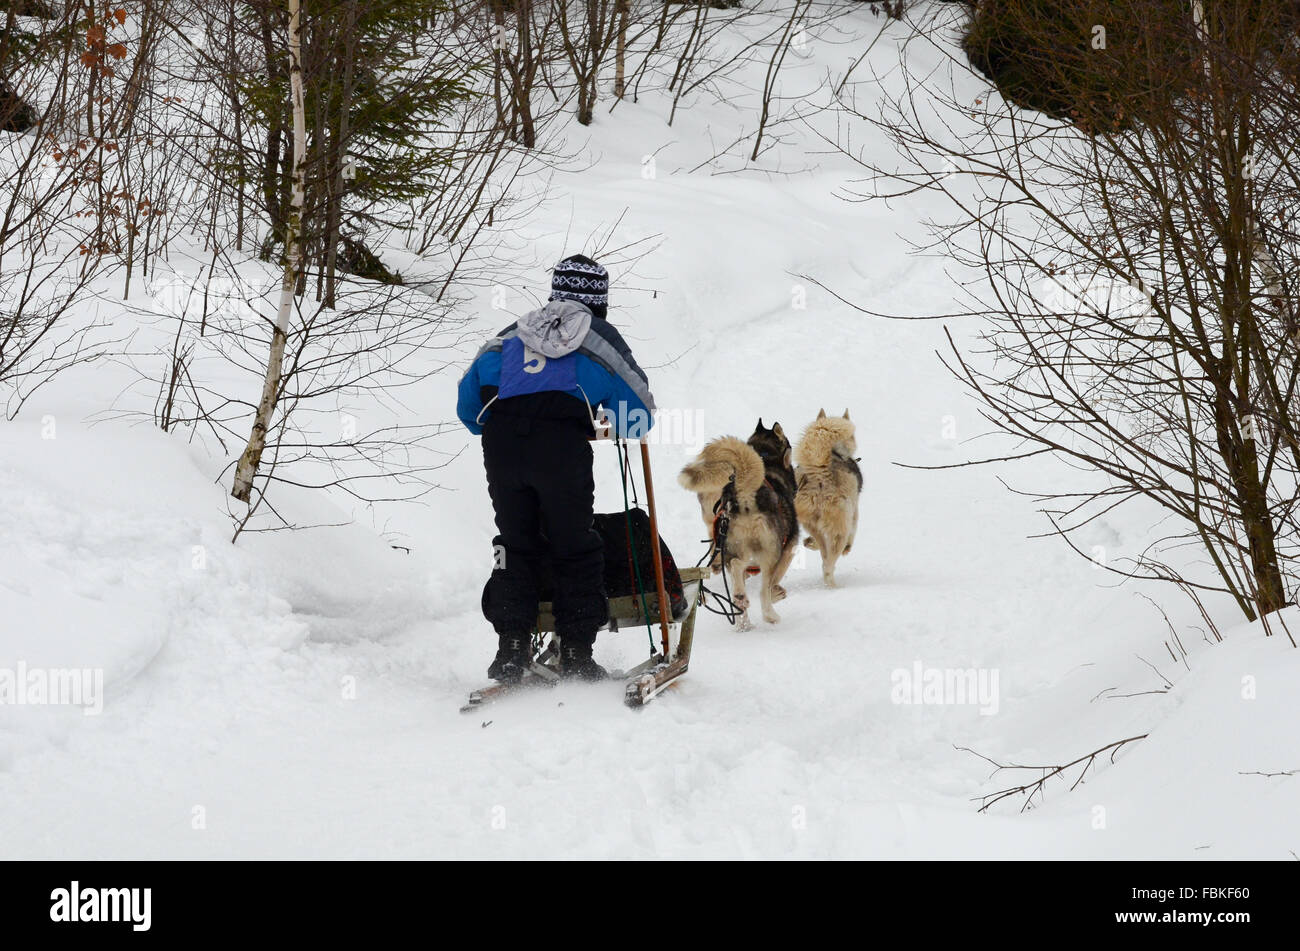 Sled Dog racing con Siberian Husky, Alaskan Malamute, samoyeds, i cani nordici. Foto scattata in Transilvania, Romania. Foto Stock